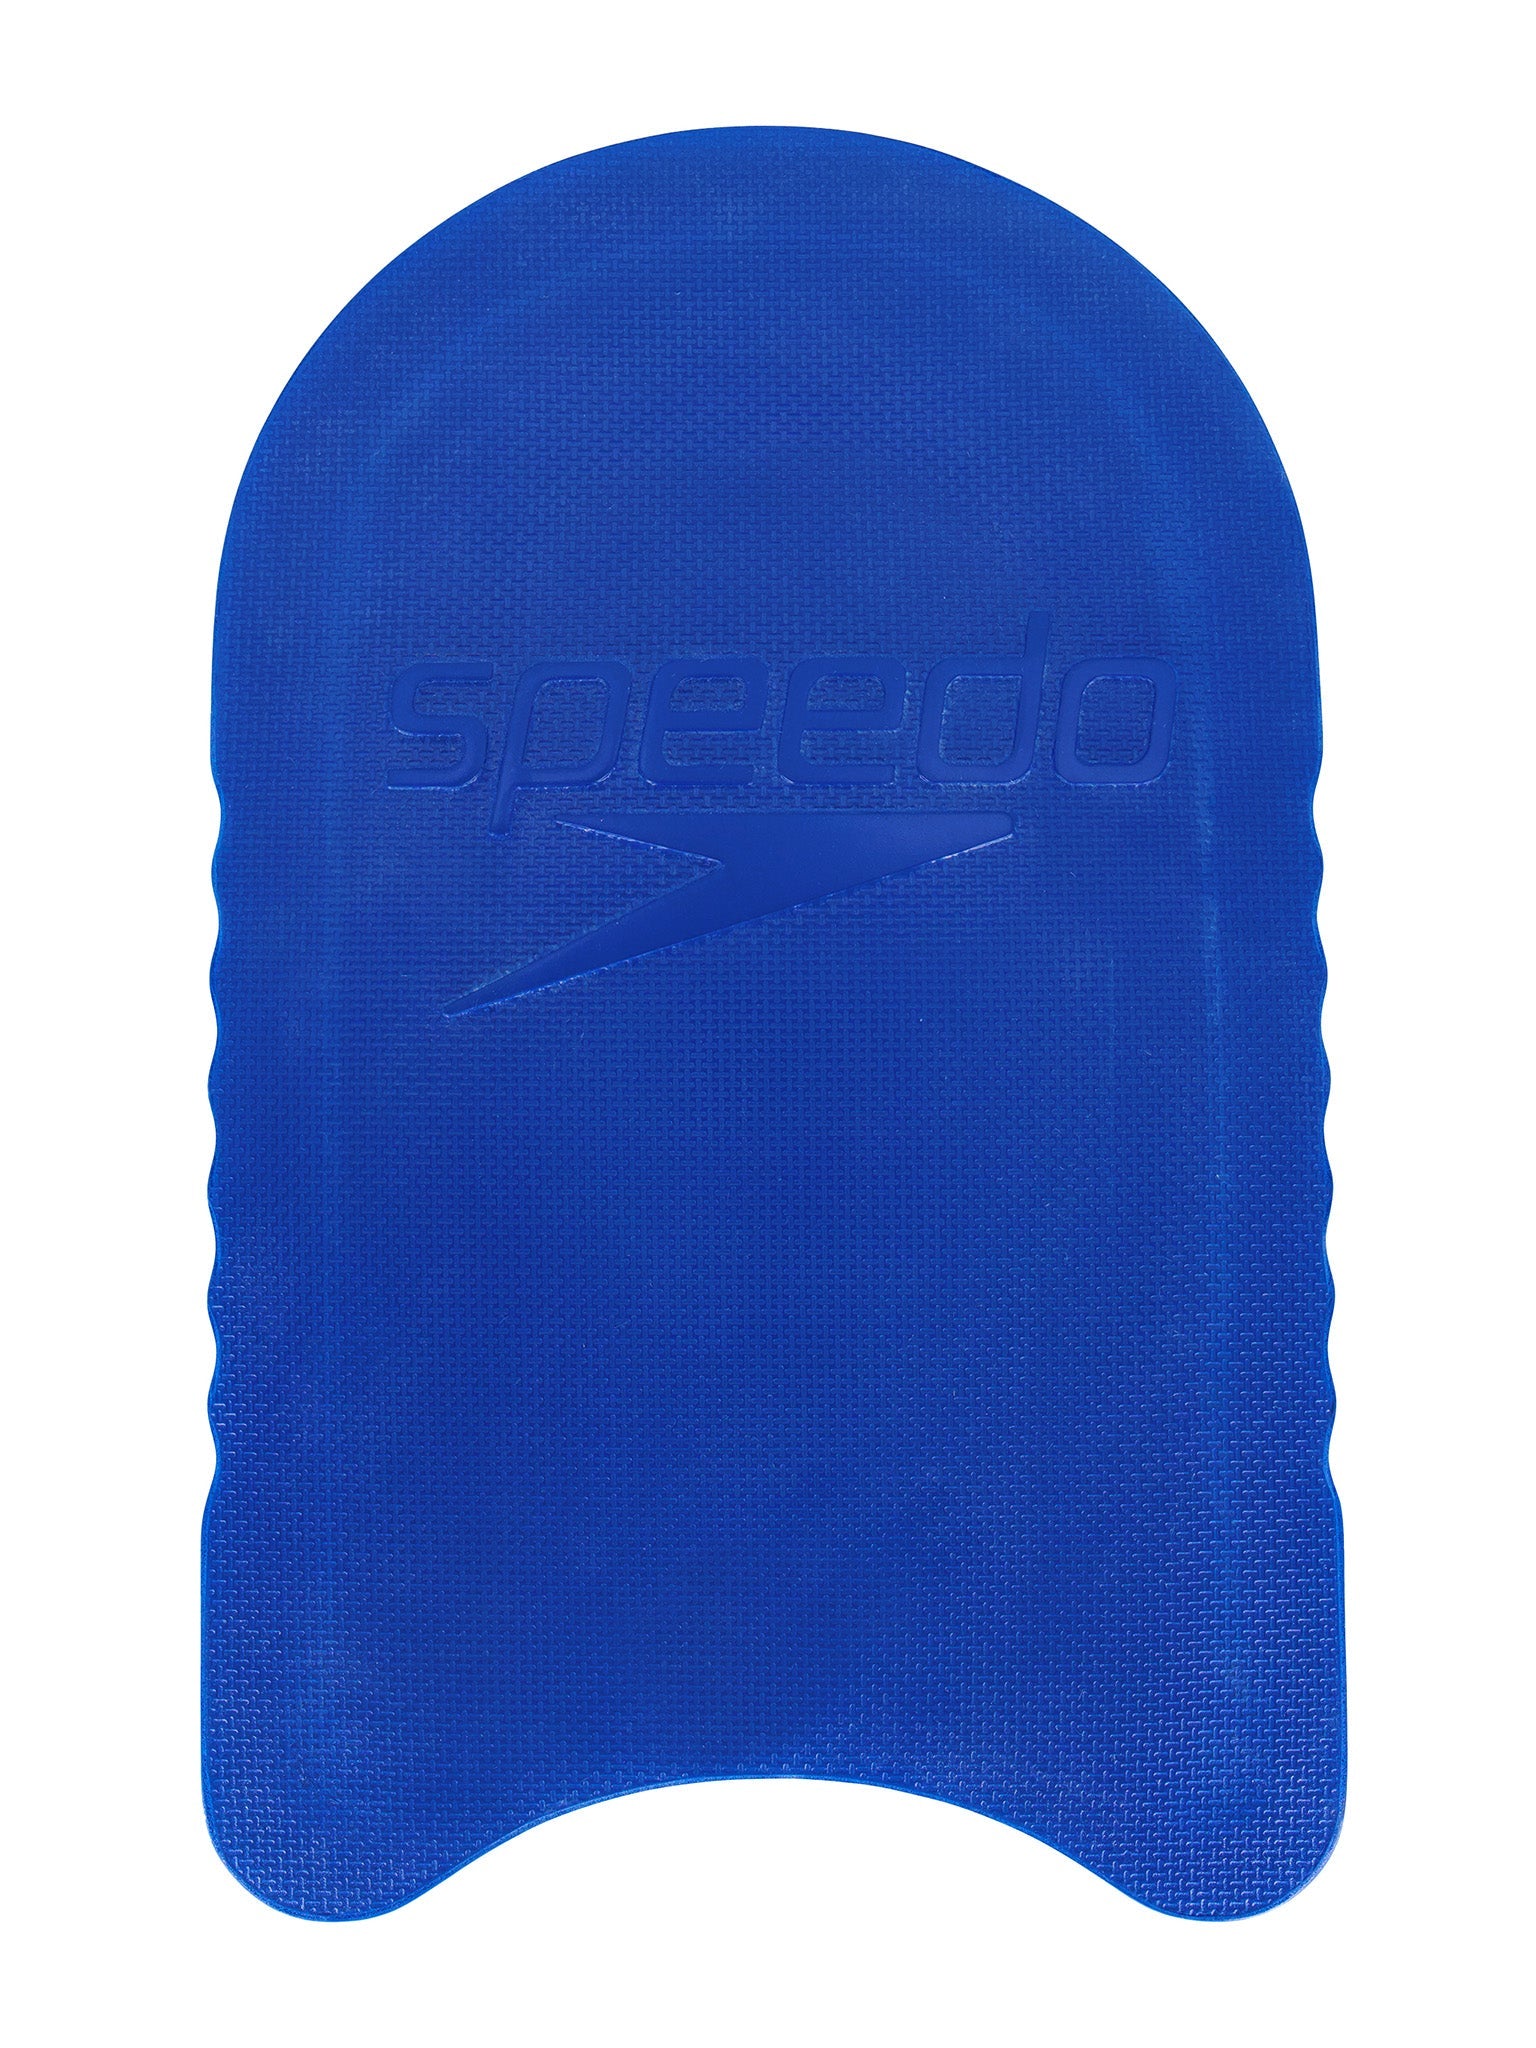 Planche de natation Speedo - Bleu